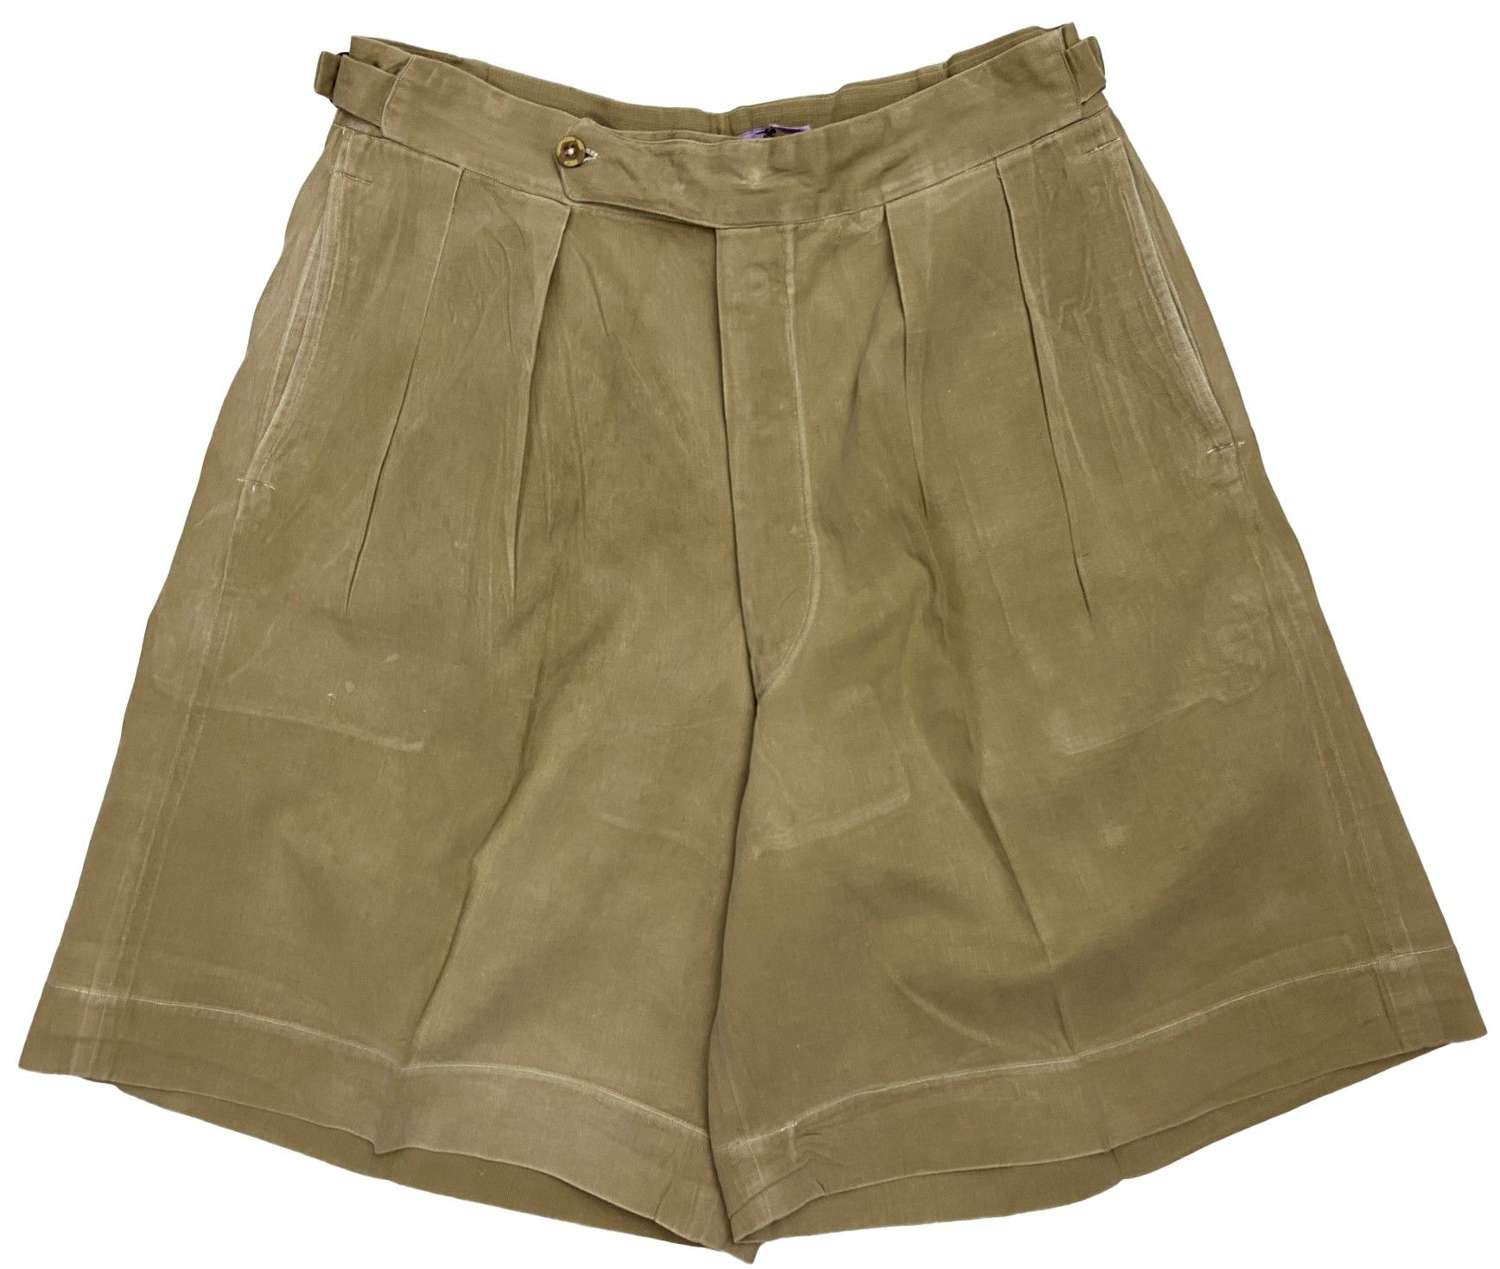 Original 1940s British Military Khaki Drill Shorts - Size 30